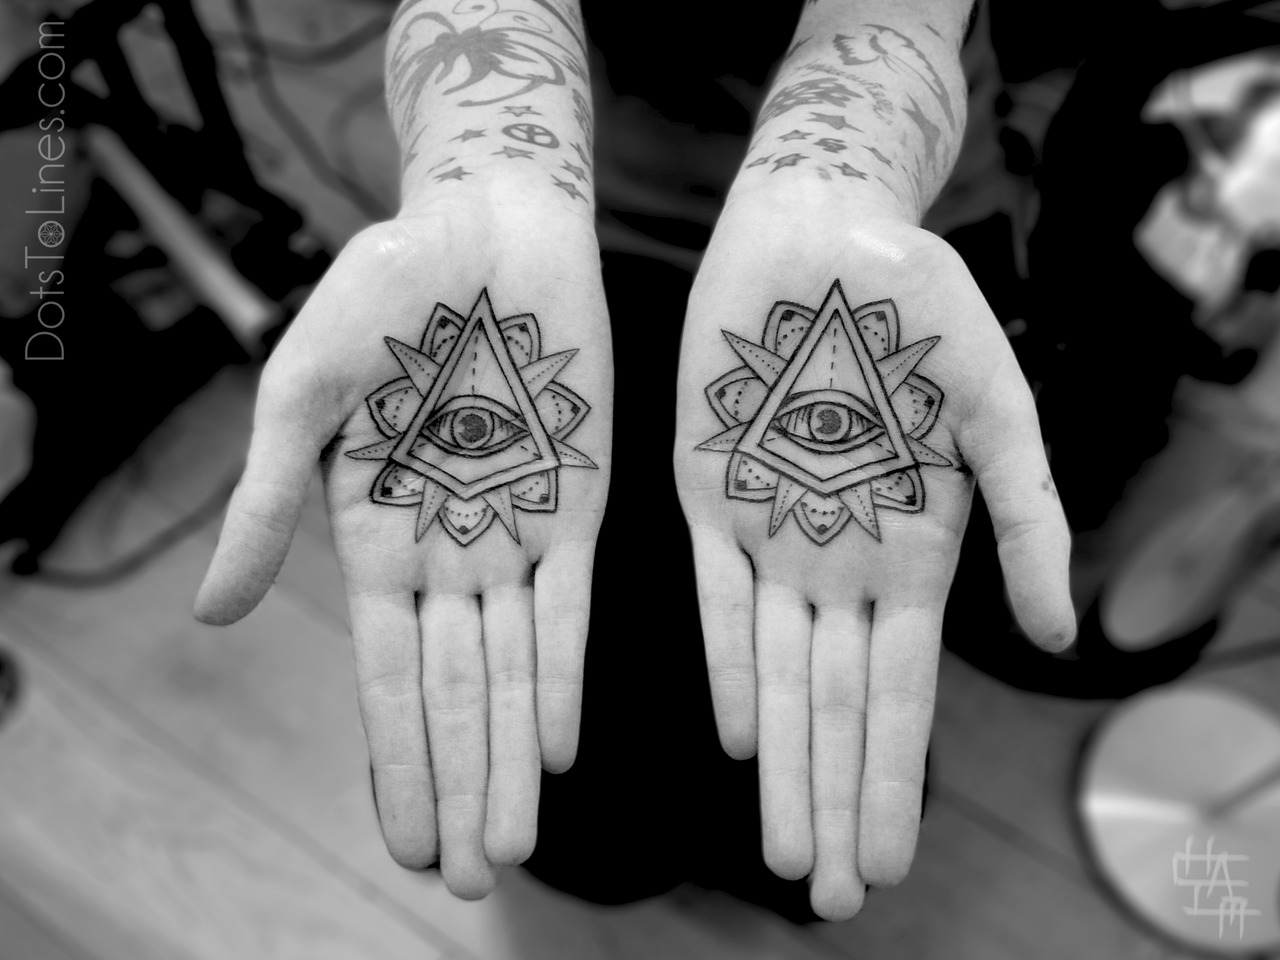 Eyes hands tattoos